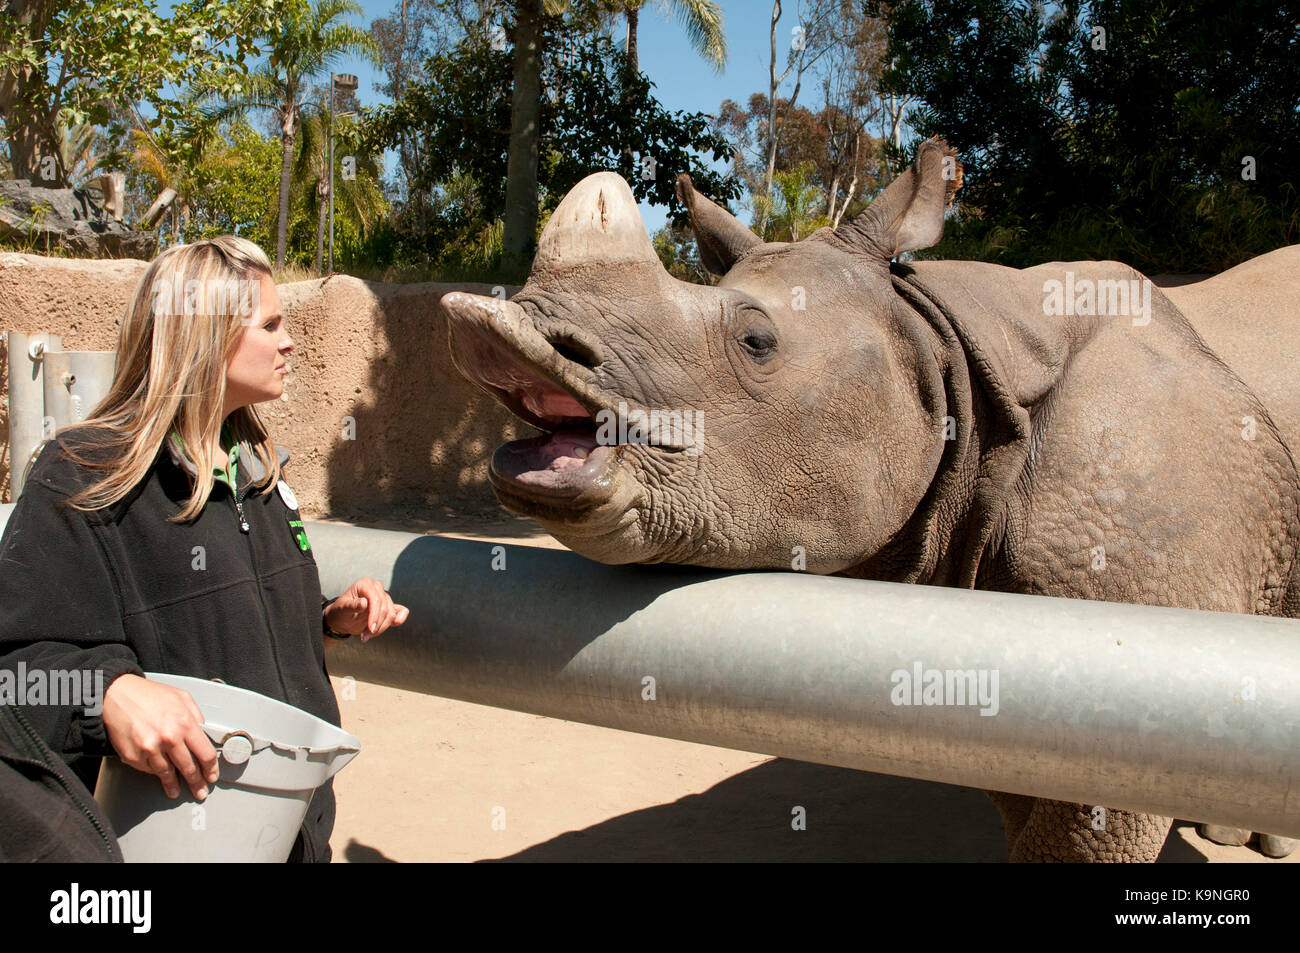 Zoo keeper feeding a rhinoceros at San Diego Zoo, Balboa Park, California, USA Stock Photo